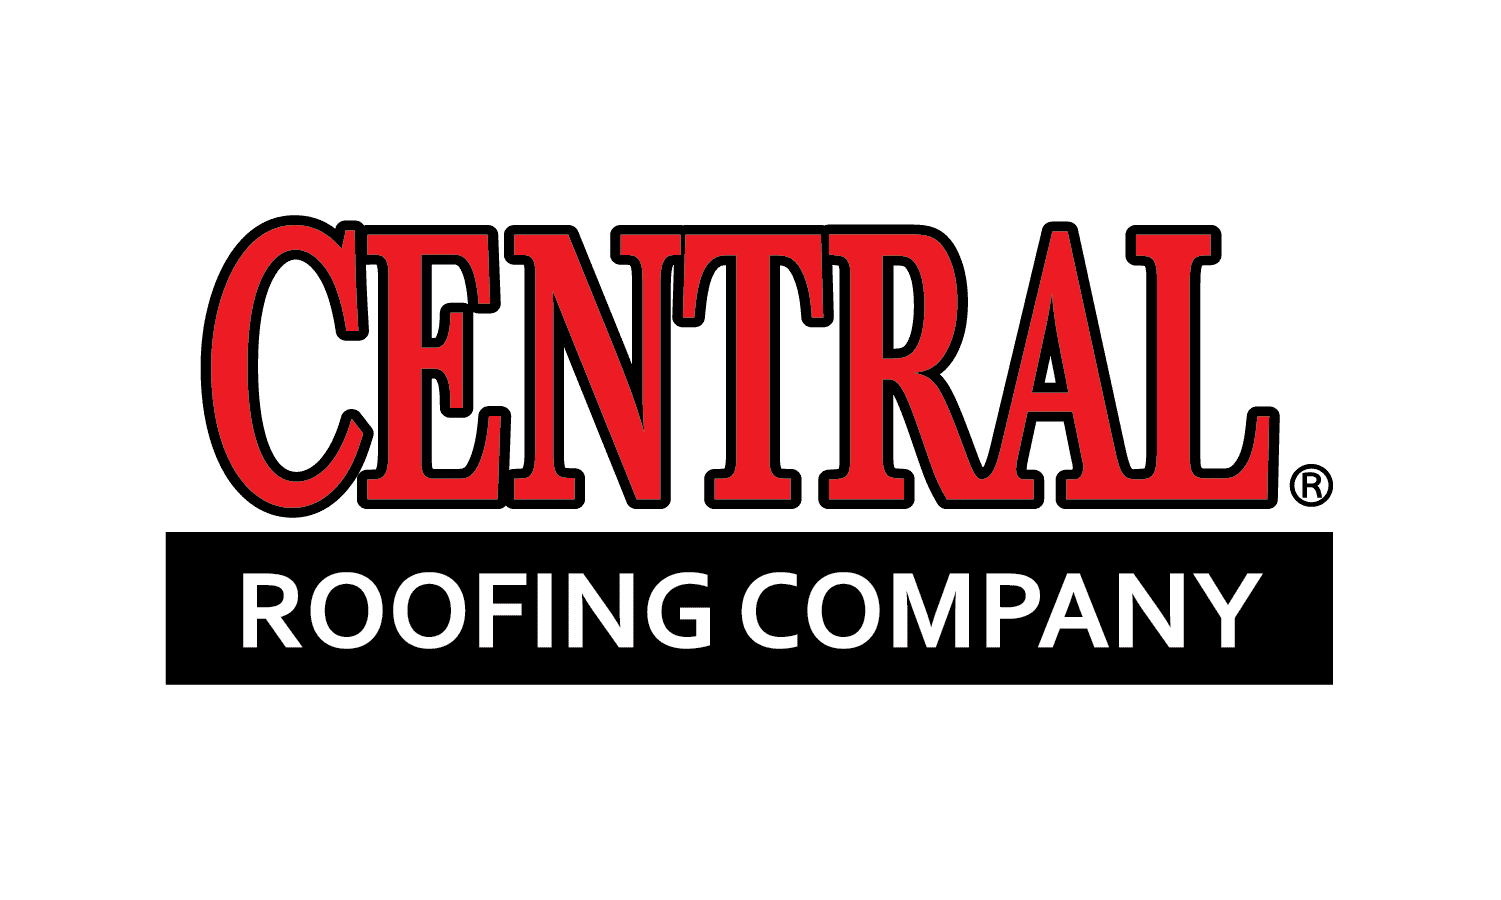 Centralroofing Logo Vfol.2 02